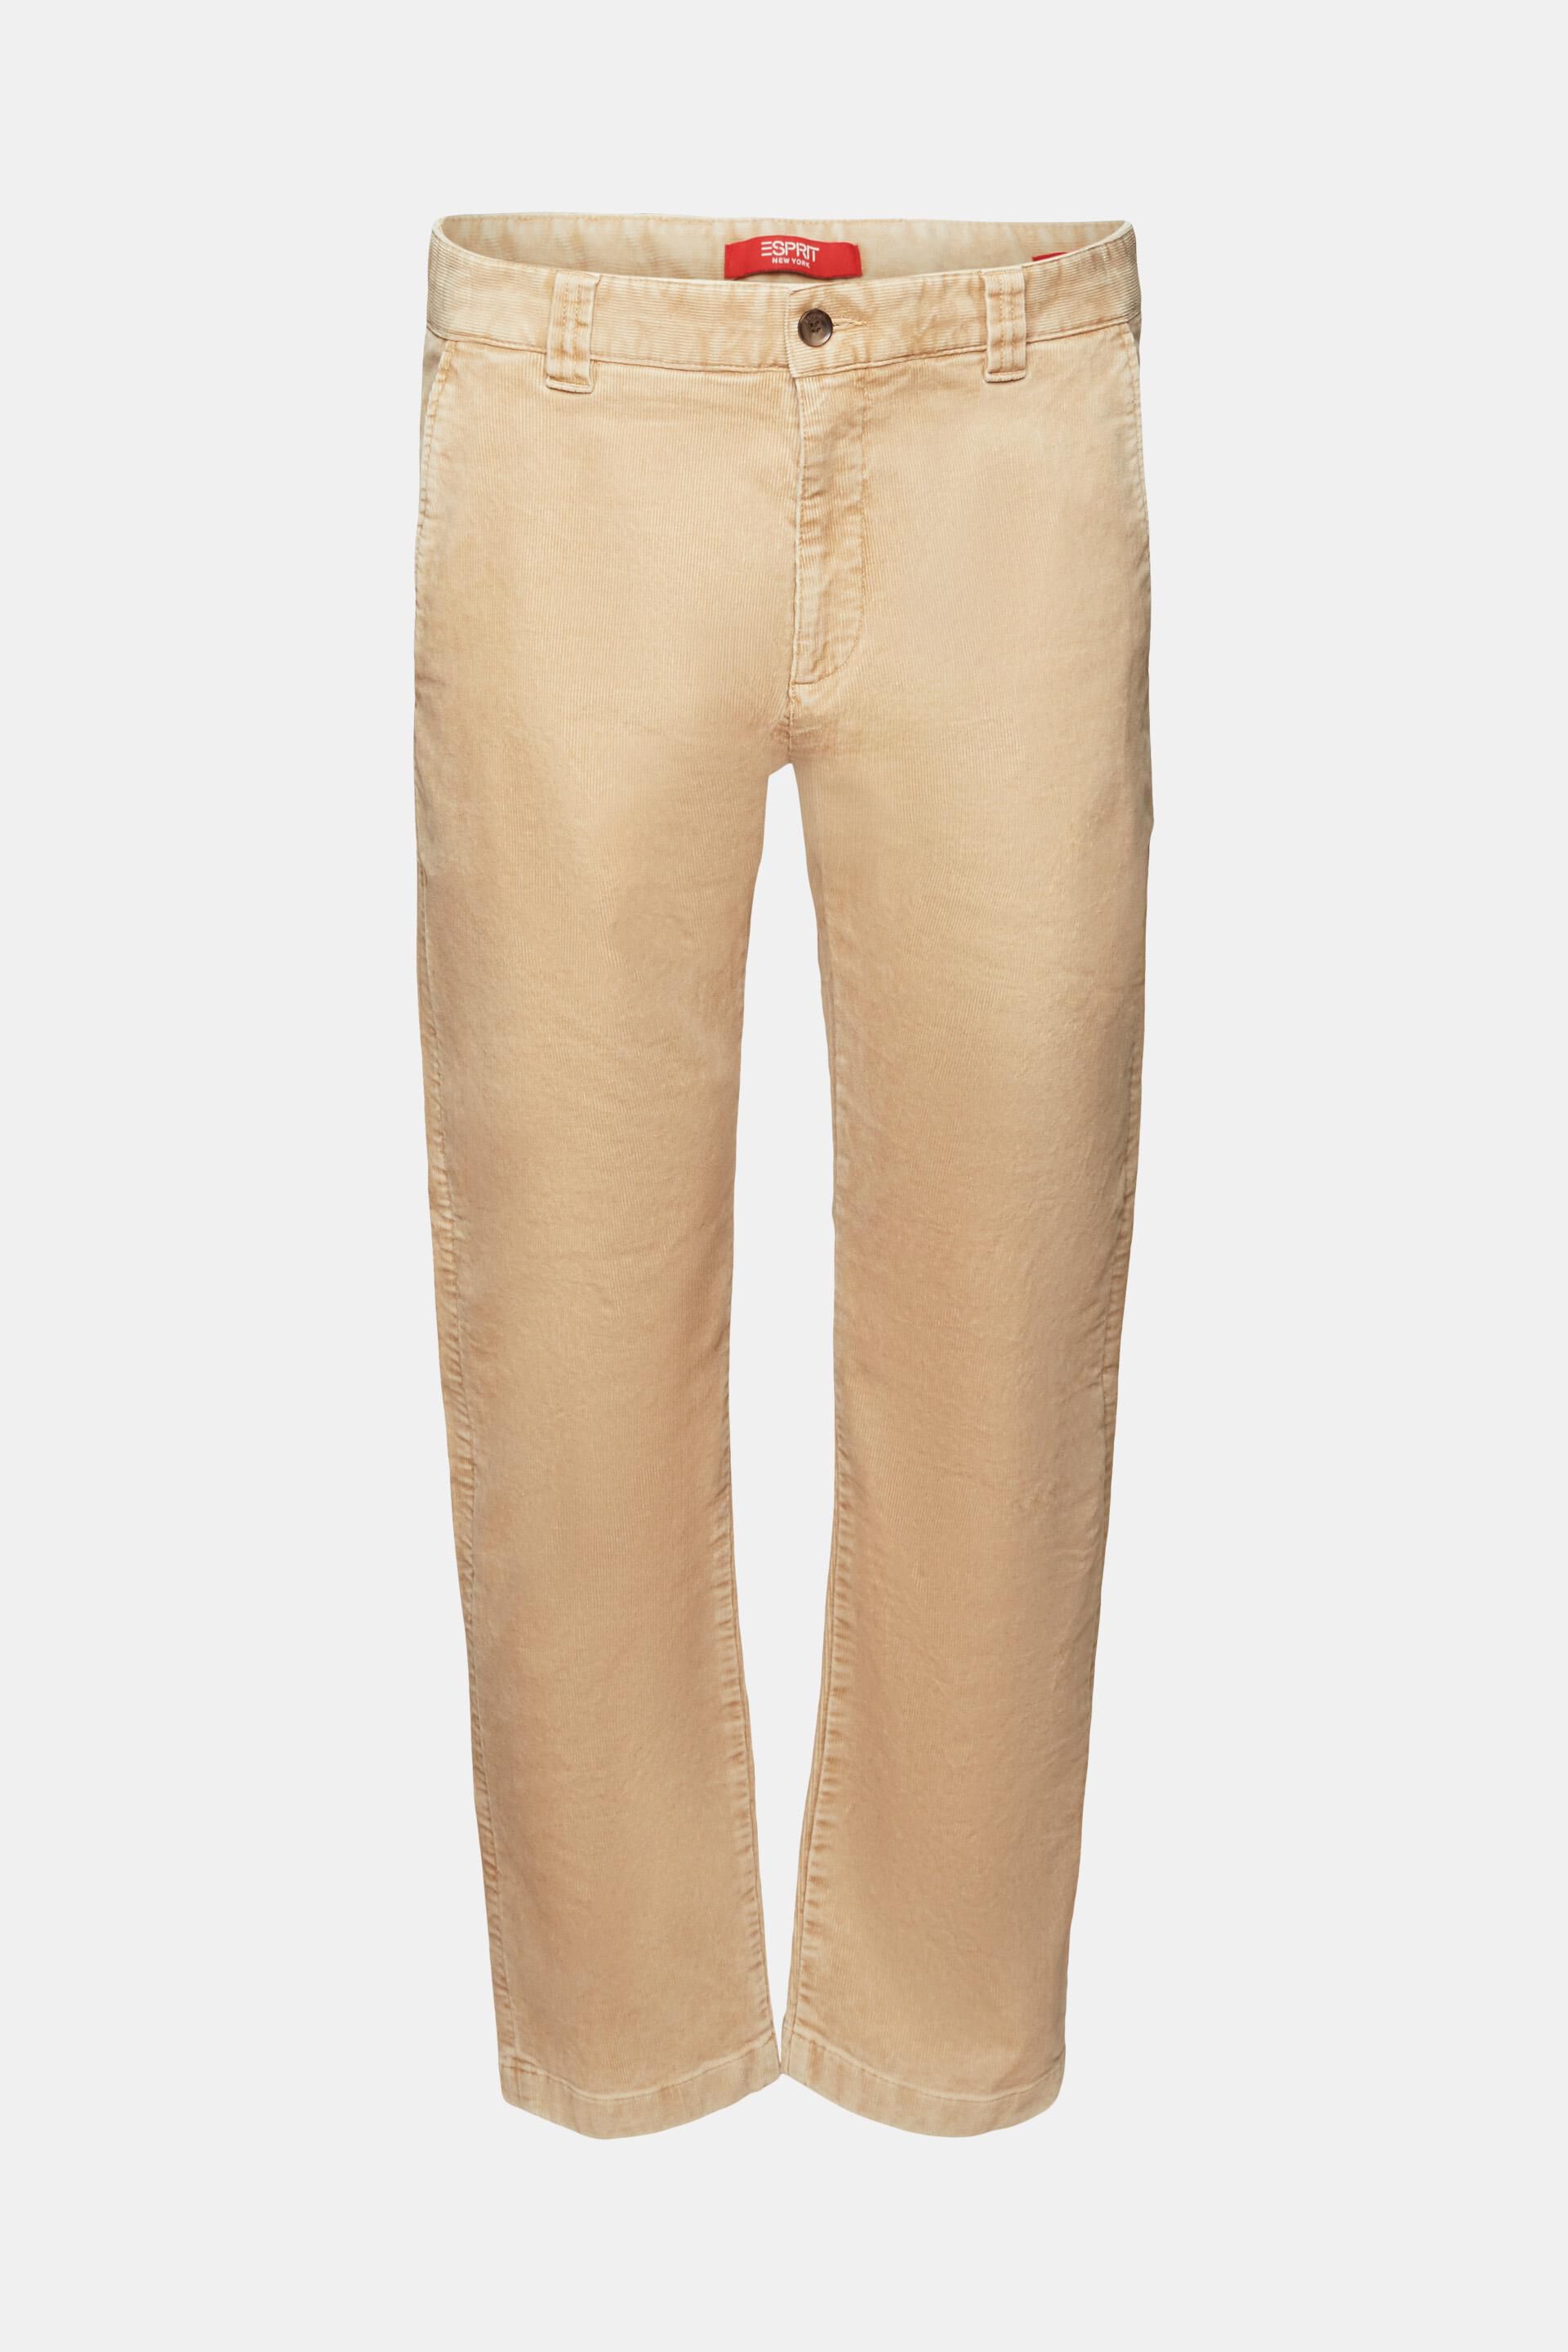 Esprit Chinos Pants Slim Fit 30 32 Jeans Trousers Mens Fashion Men, Men's  Fashion, Bottoms, Trousers on Carousell